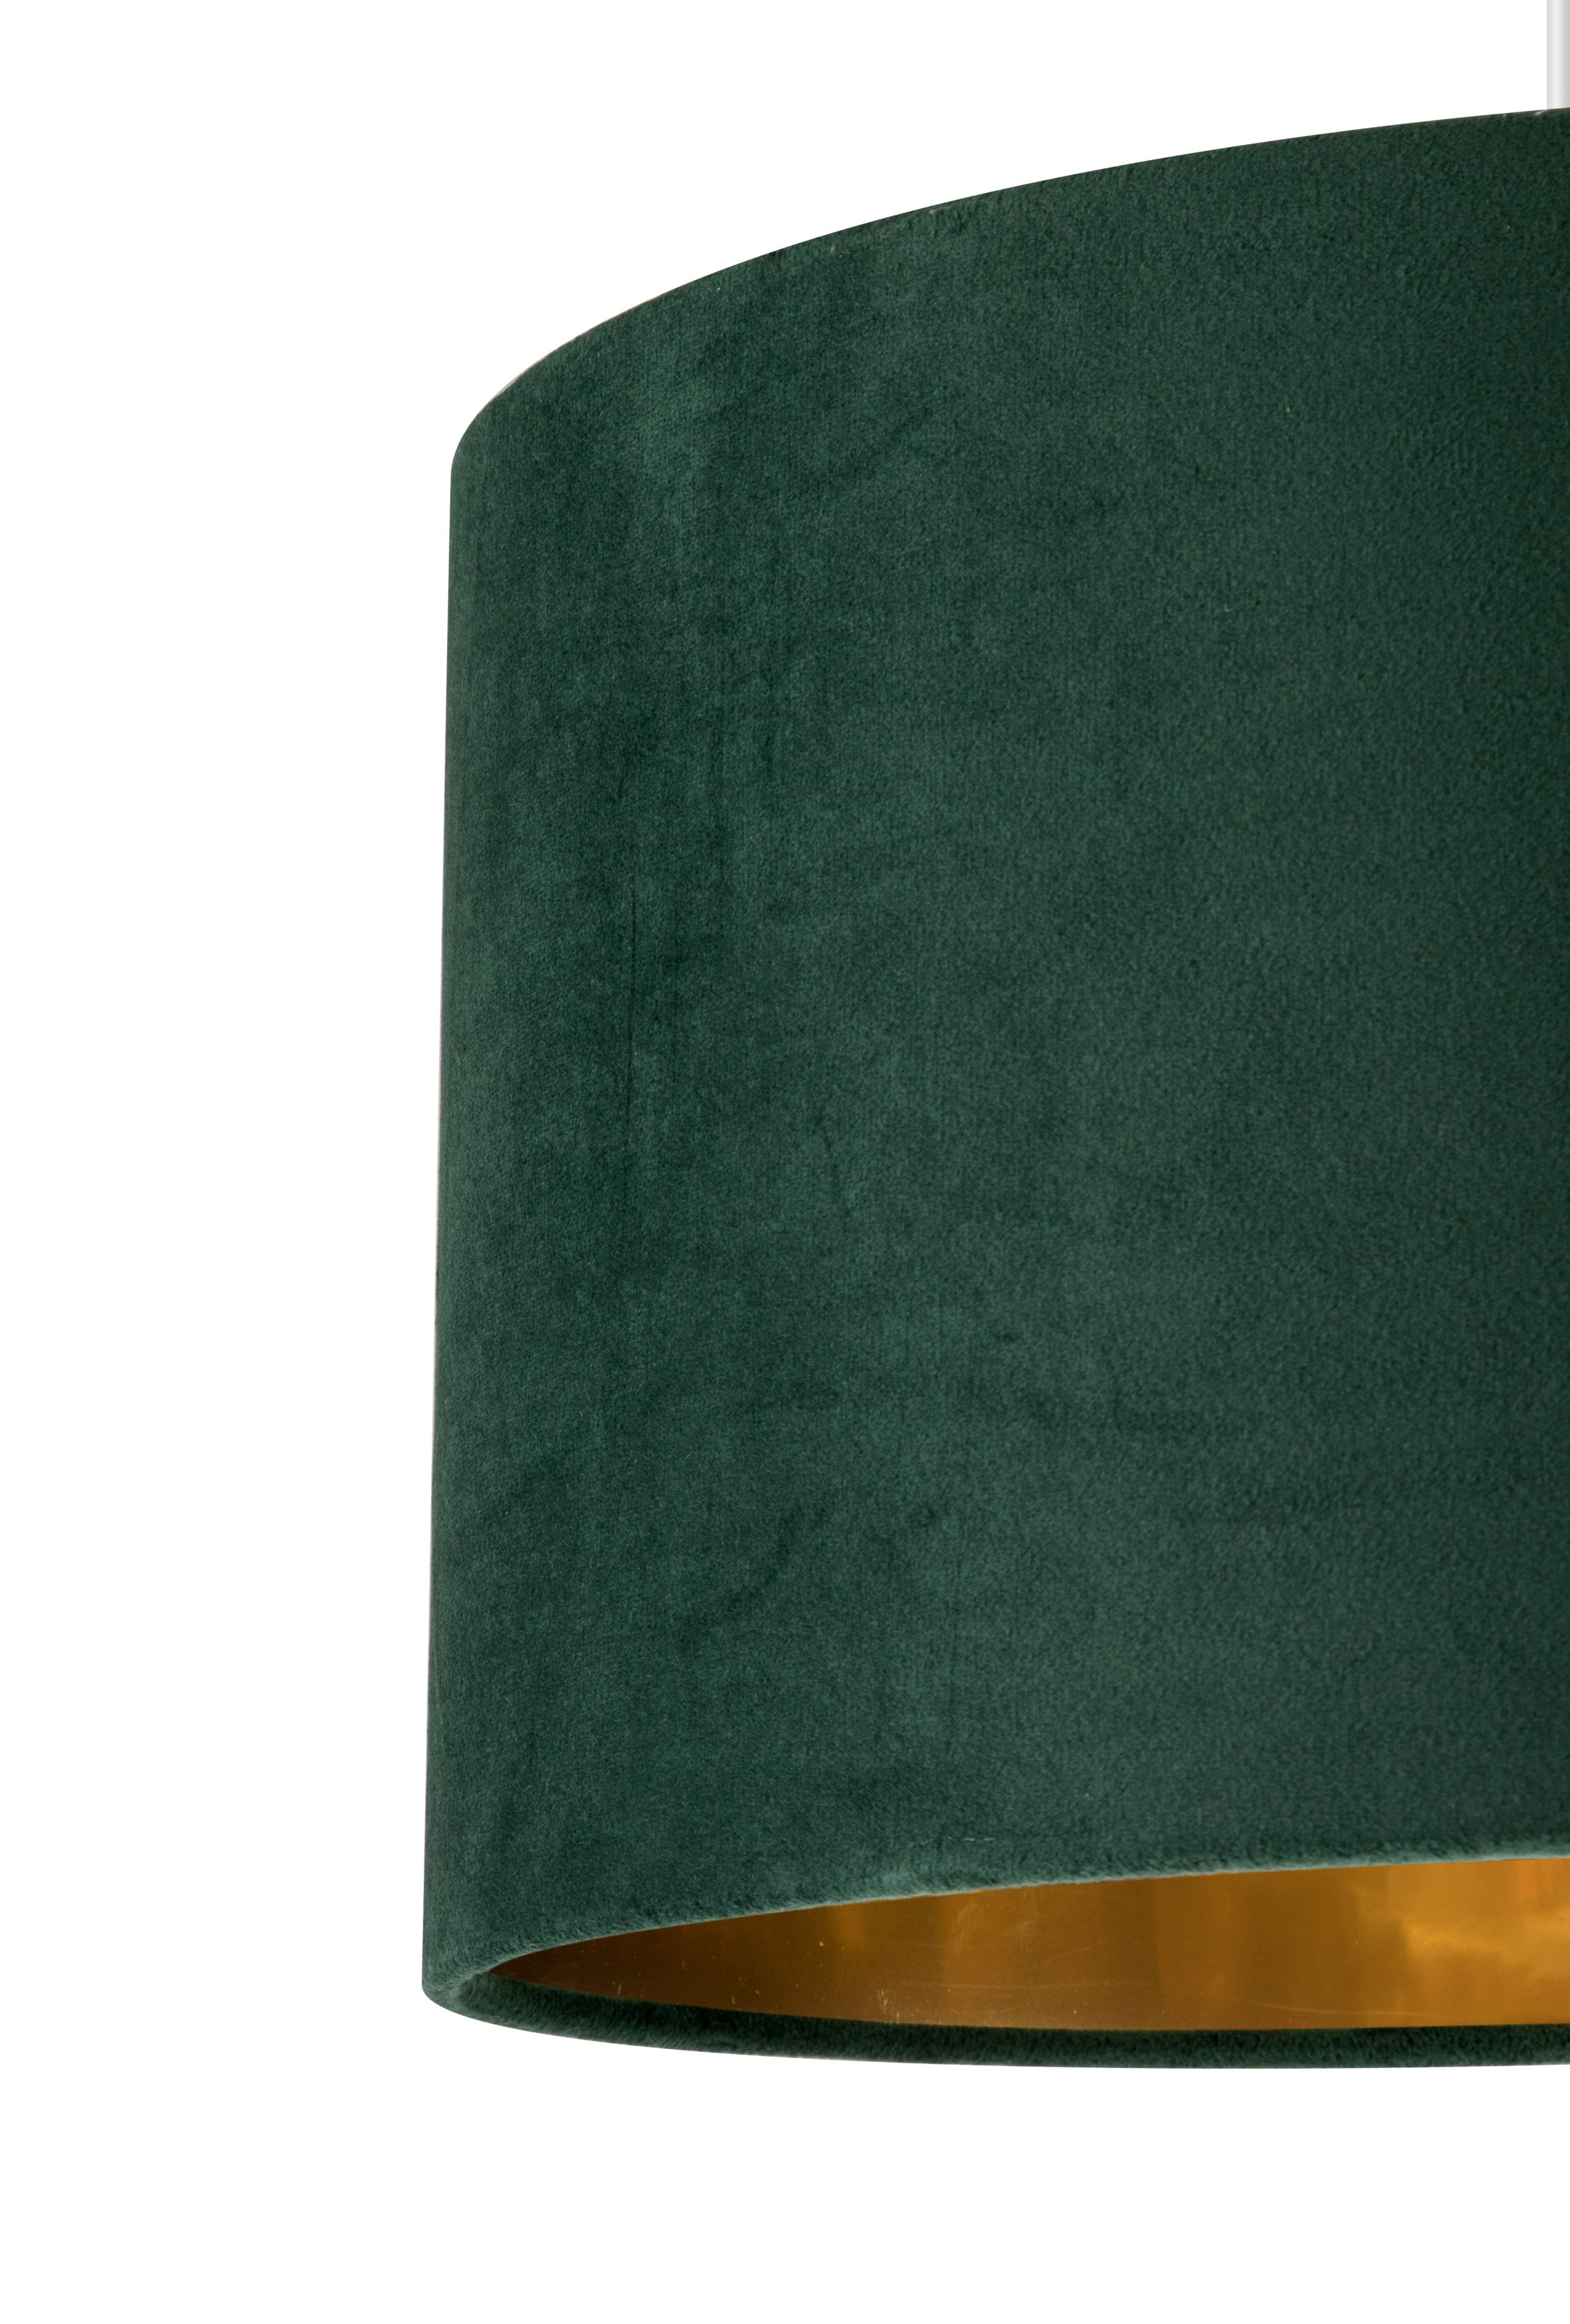 GoodHome Bodmin Dark green Oval Lamp shade (D)30cm